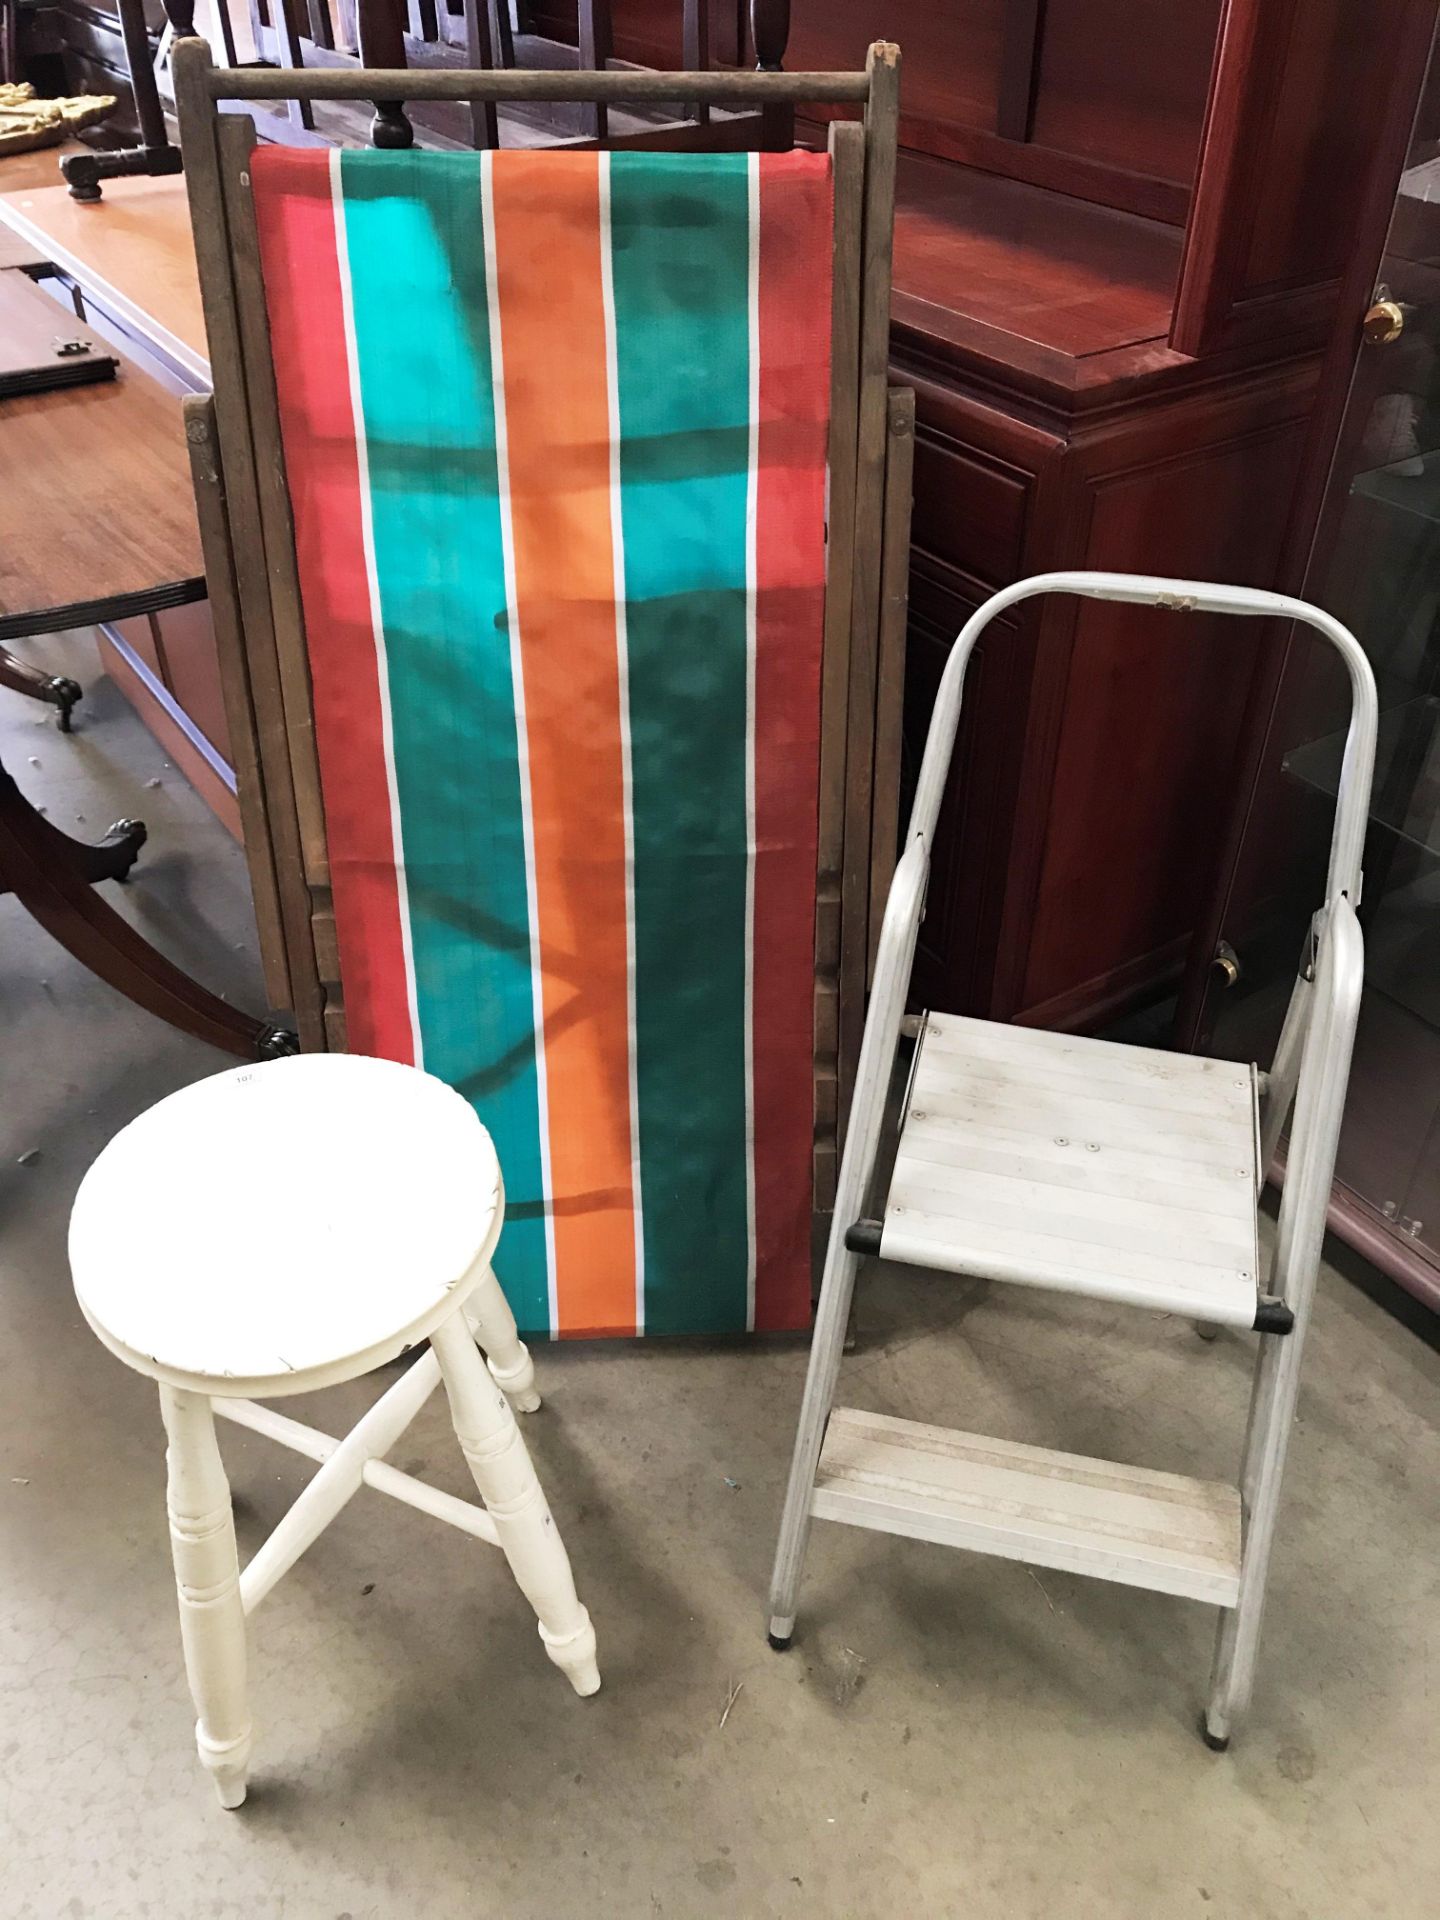 Three items - white painted stool,